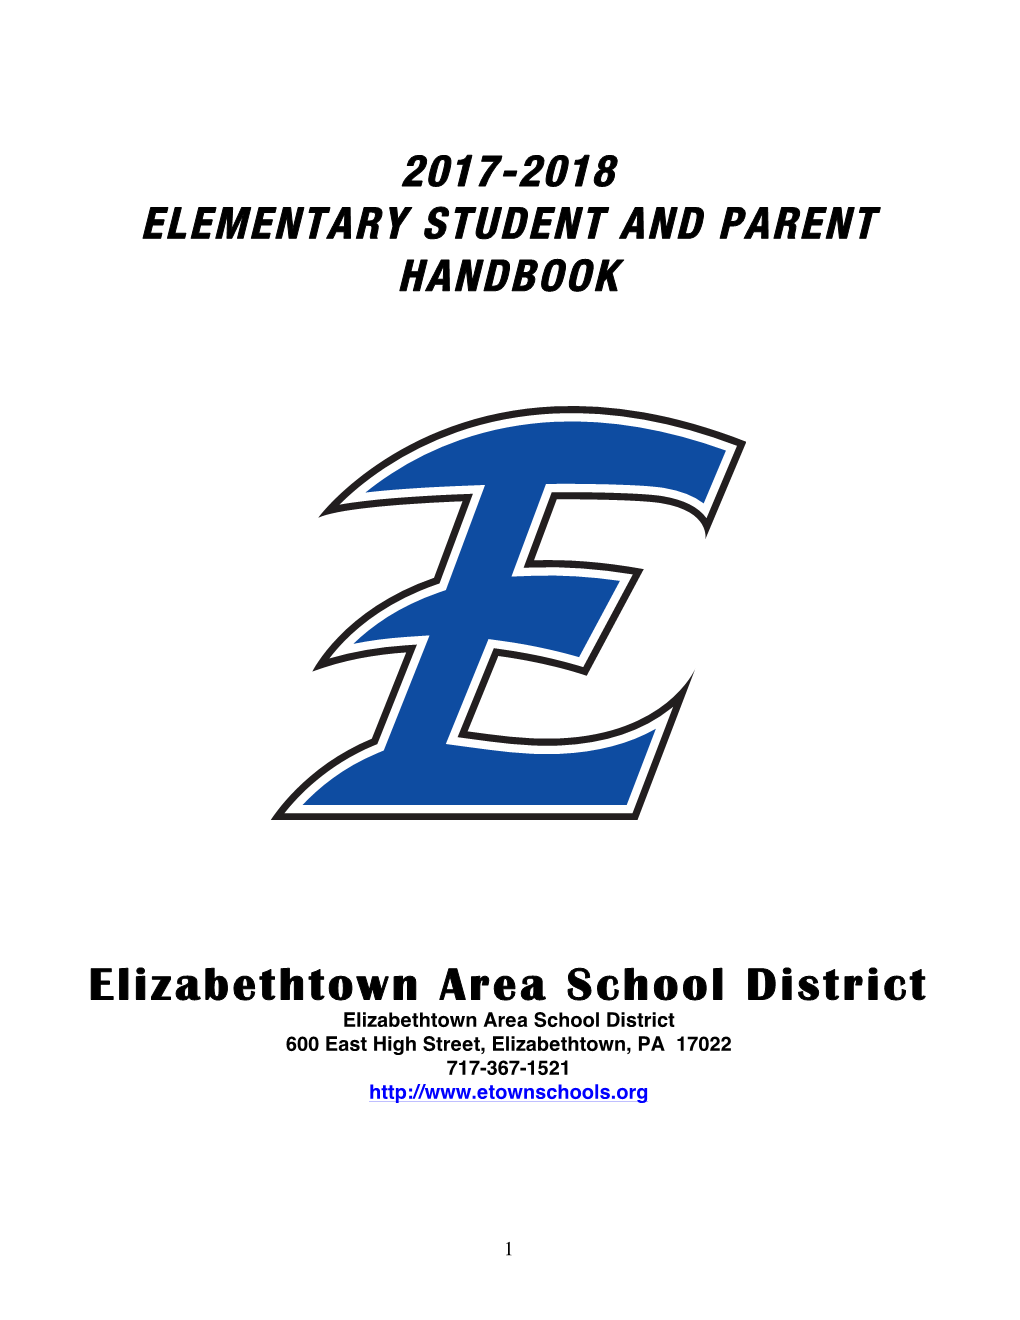 Elizabethtown Area School District Elizabethtown Area School District 600 East High Street, Elizabethtown, PA 17022 717-367-1521